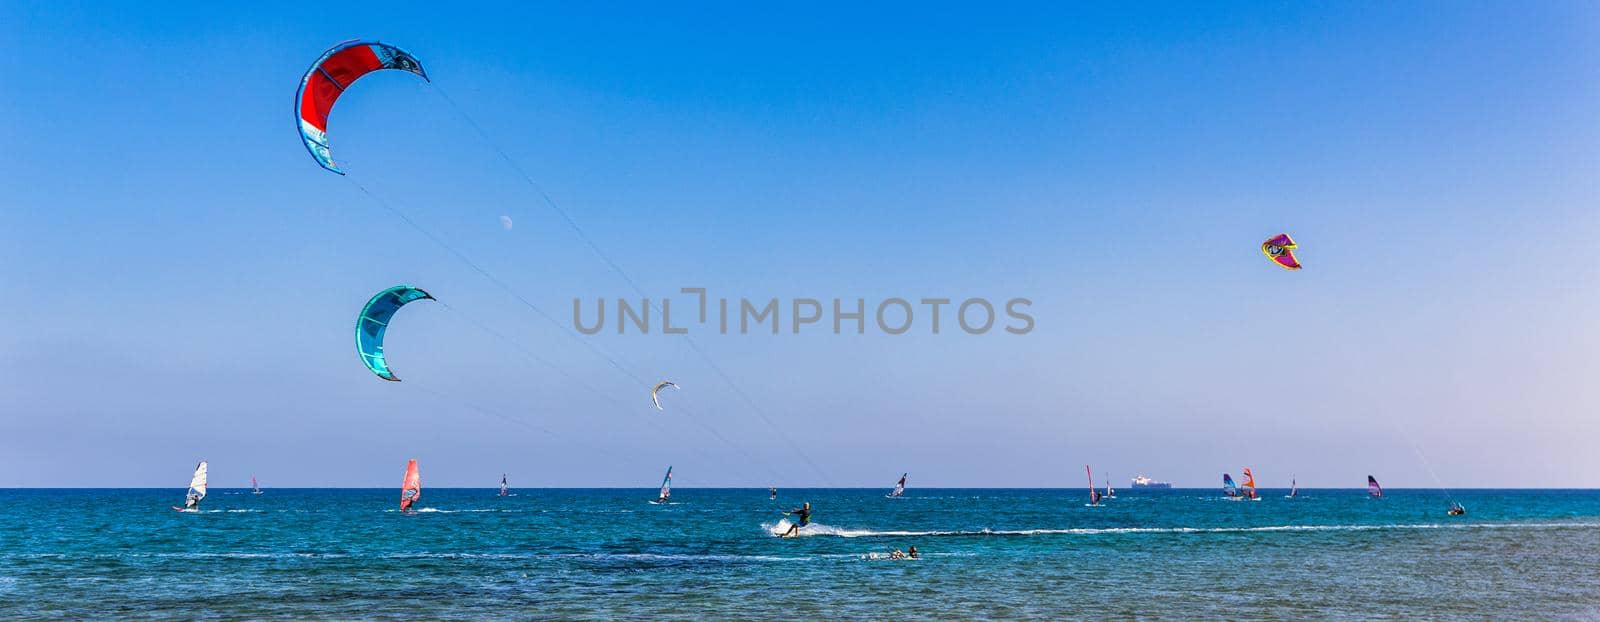 Surfers in Prasonisi Beach in Rhodes island, Greece. Kiteboarder kitesurfer athlete performing kitesurfing kiteboarding tricks. Prasonisi Beach is popular location for surfing. Greece